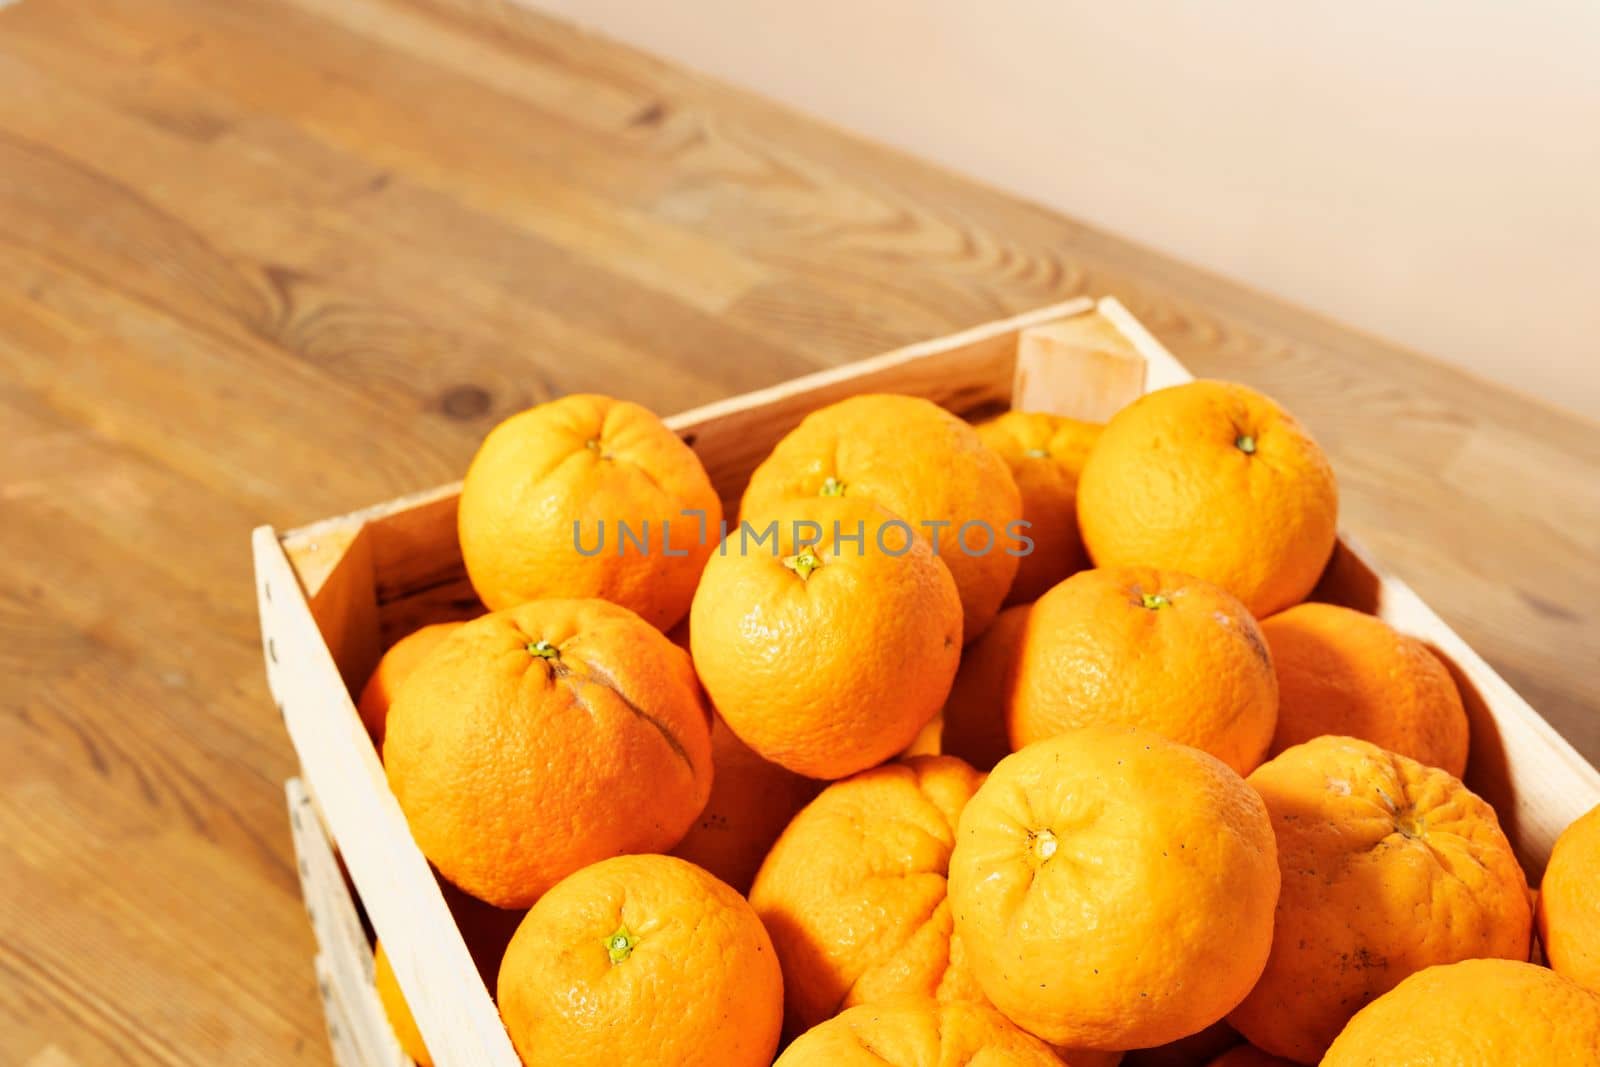 Fresh oranges in wooden box by victimewalker